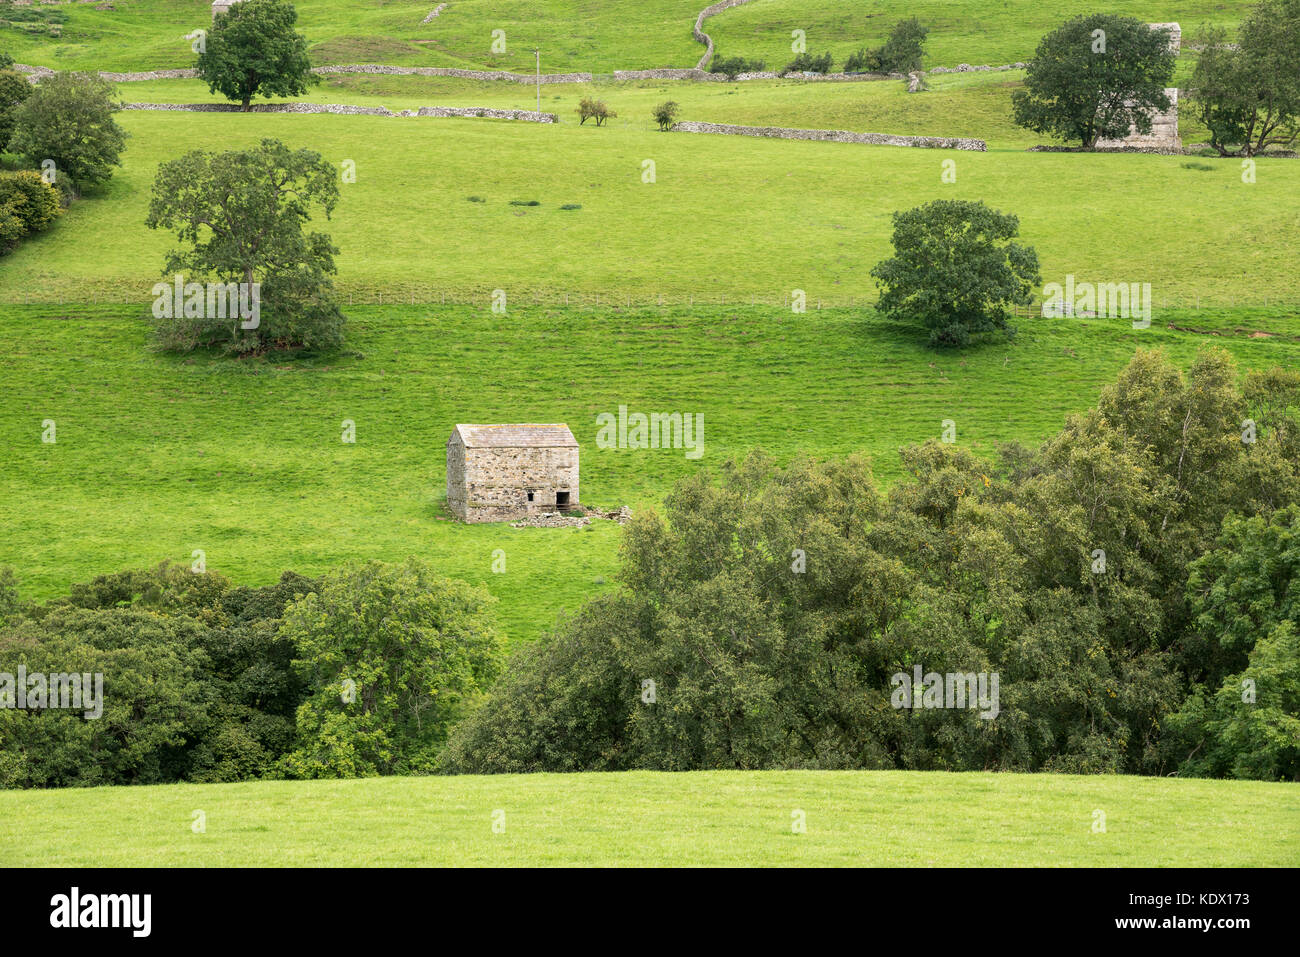 Traditionelle Scheune oder 'Kuh Haus" in der Nähe von muker in swaledale, Yorkshire Dales National Park, England. Stockfoto